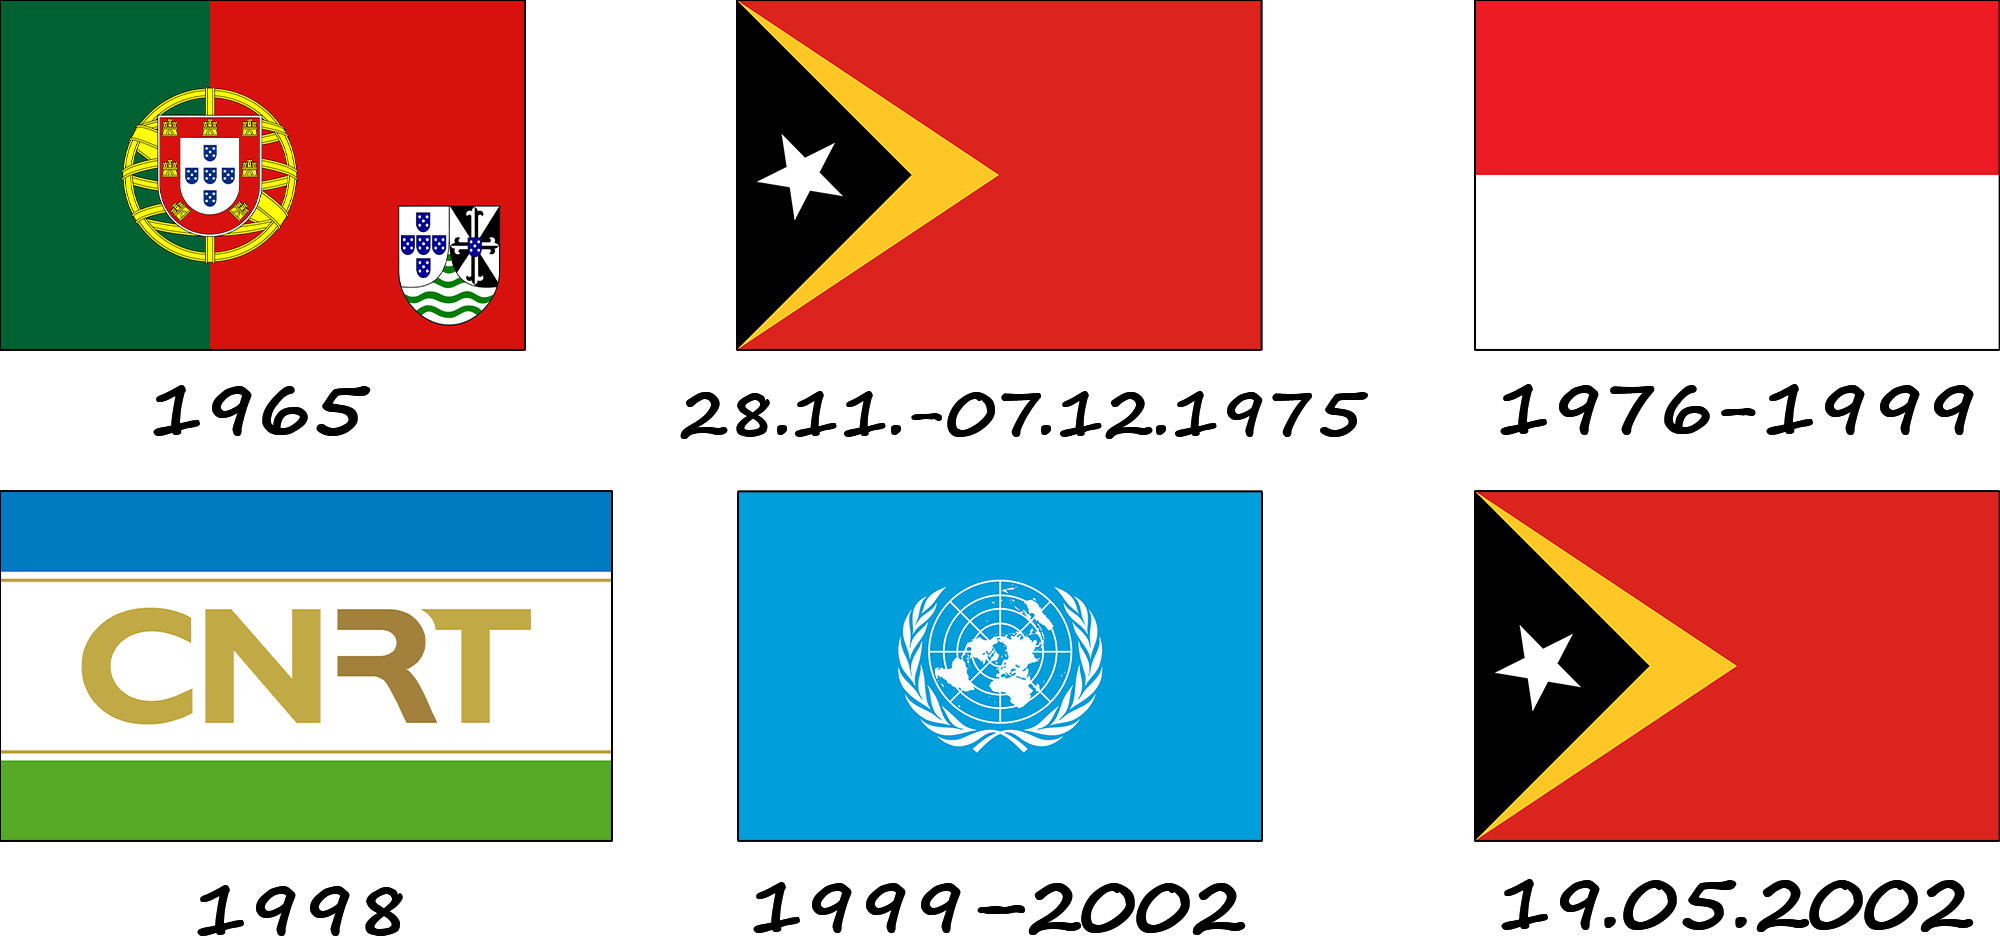 History of the East Timor flag